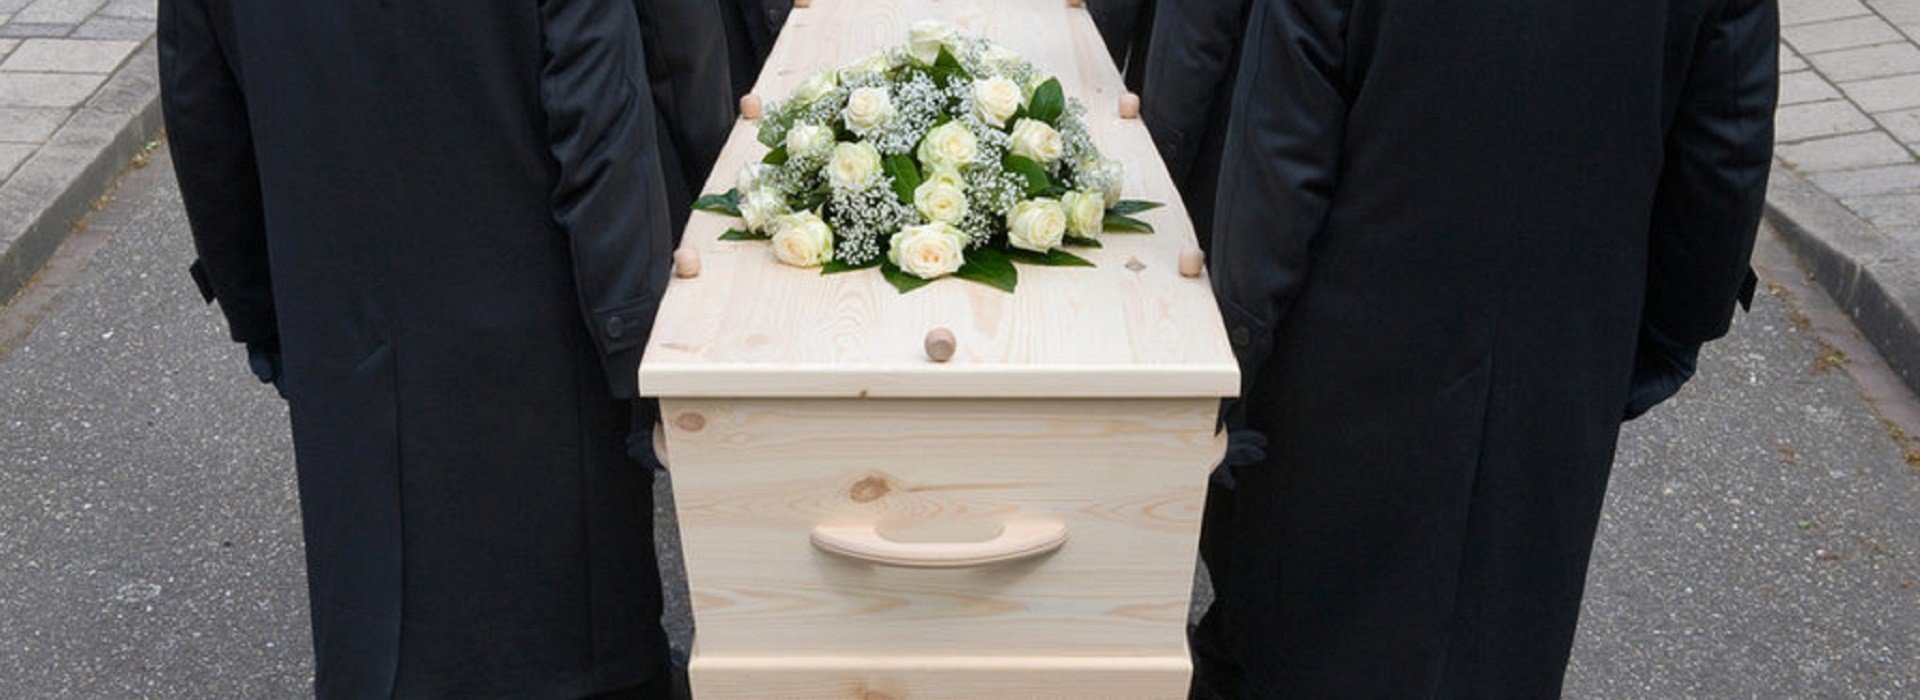 Koporsós temetés